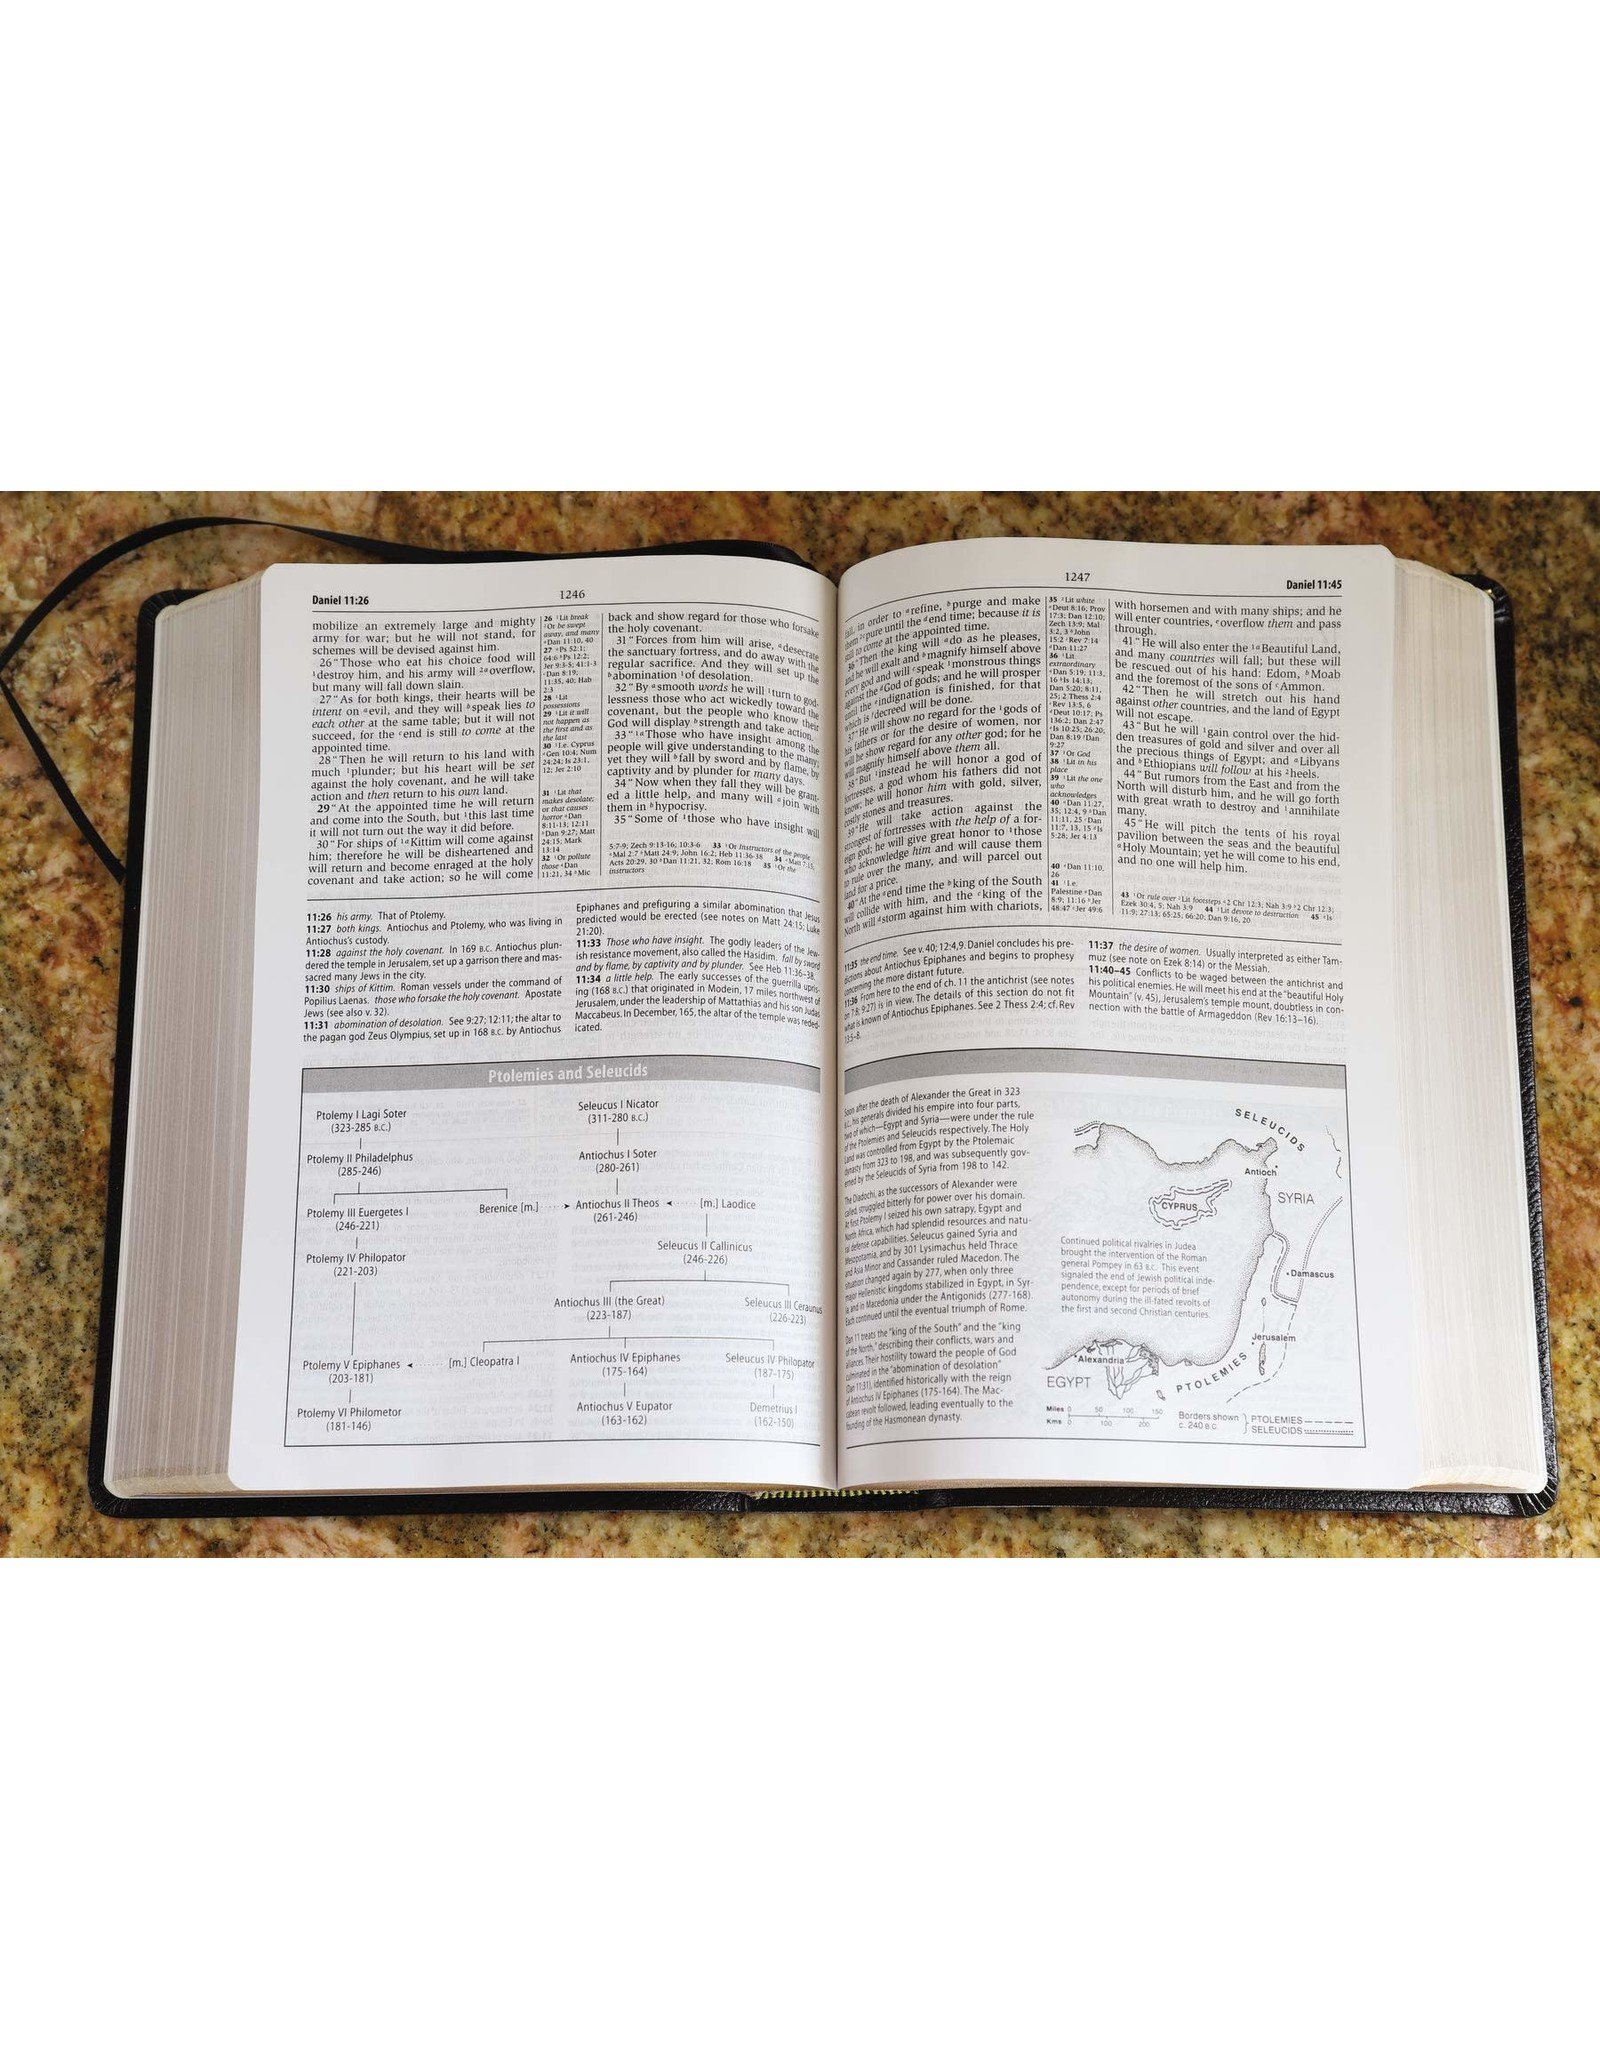 Zondervan NASB Study Bible, Black Bonded Leather